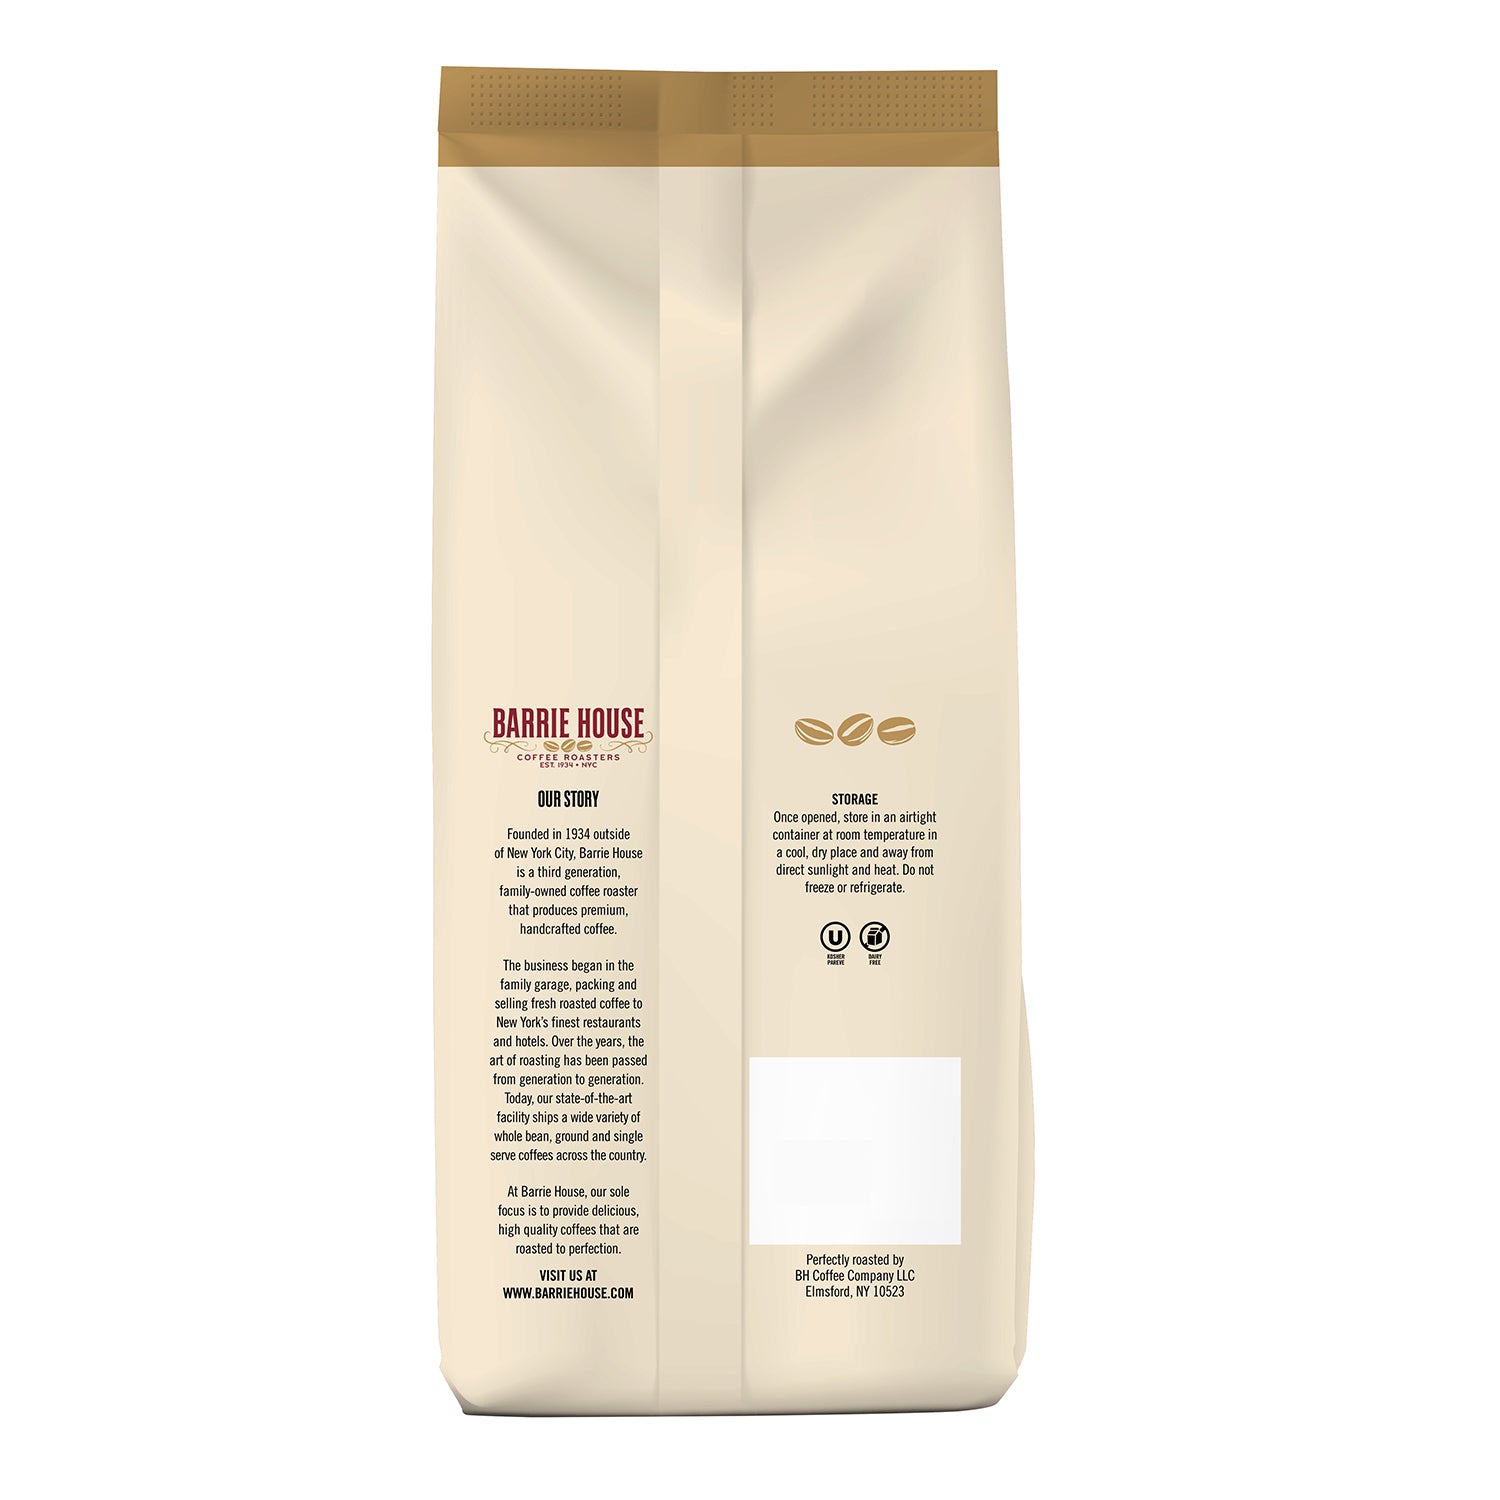 100% ColombianSingle Origin Coffee2 lb Bag - Whole Bean – Barrie House